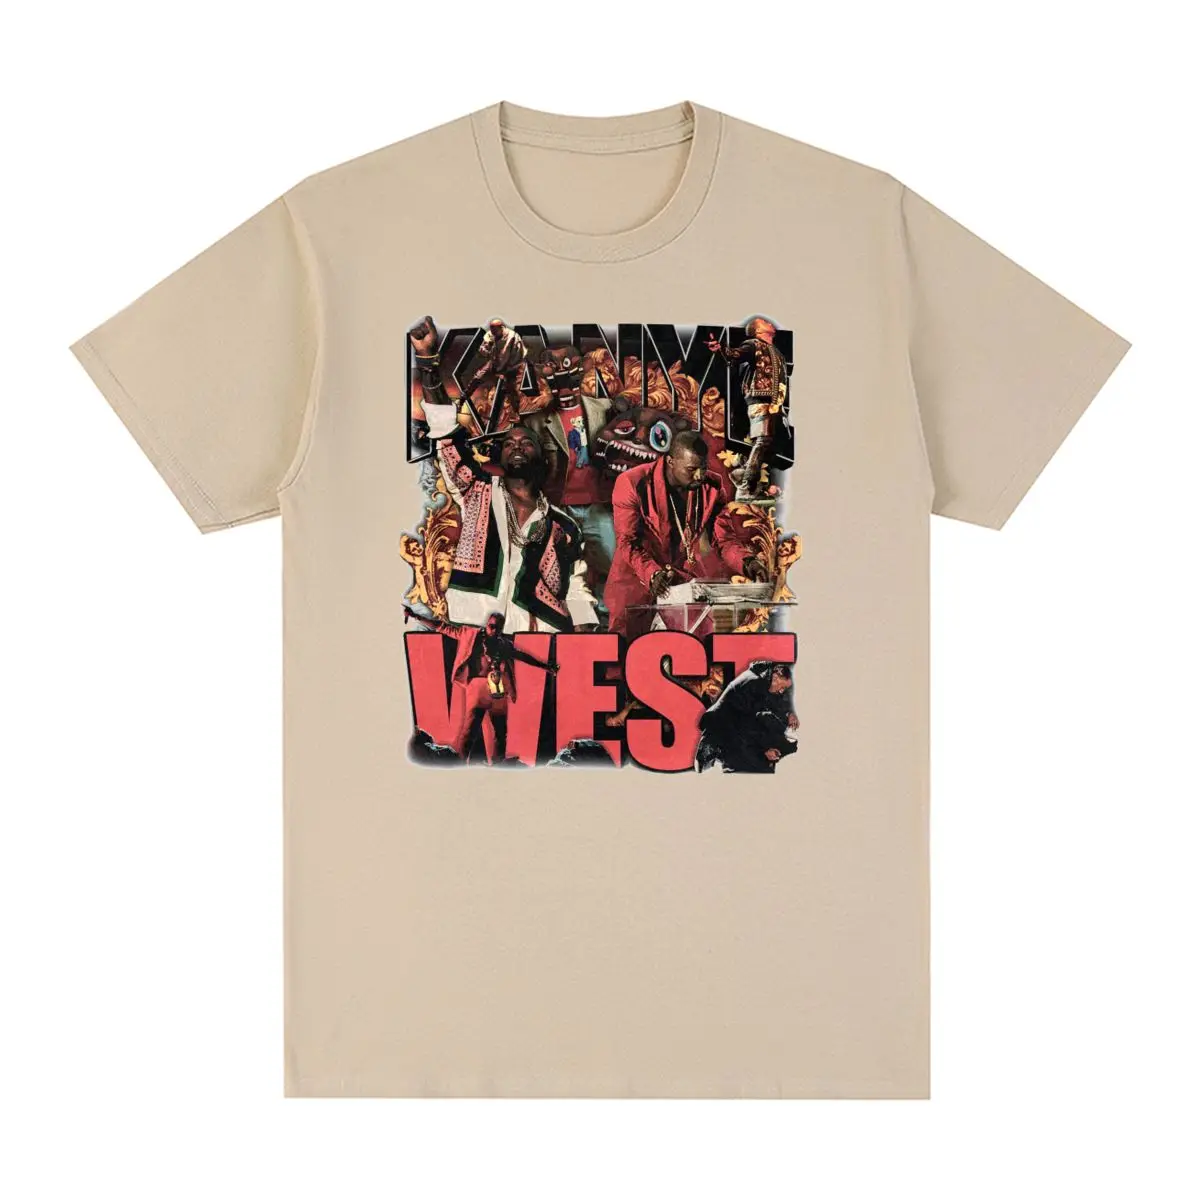 Kanye West Vintage T-shirt Streetwear Skateboard Harajuku Hip Hop Fashion Cotton Men T shirt New Tee Tshirt Womens Tops